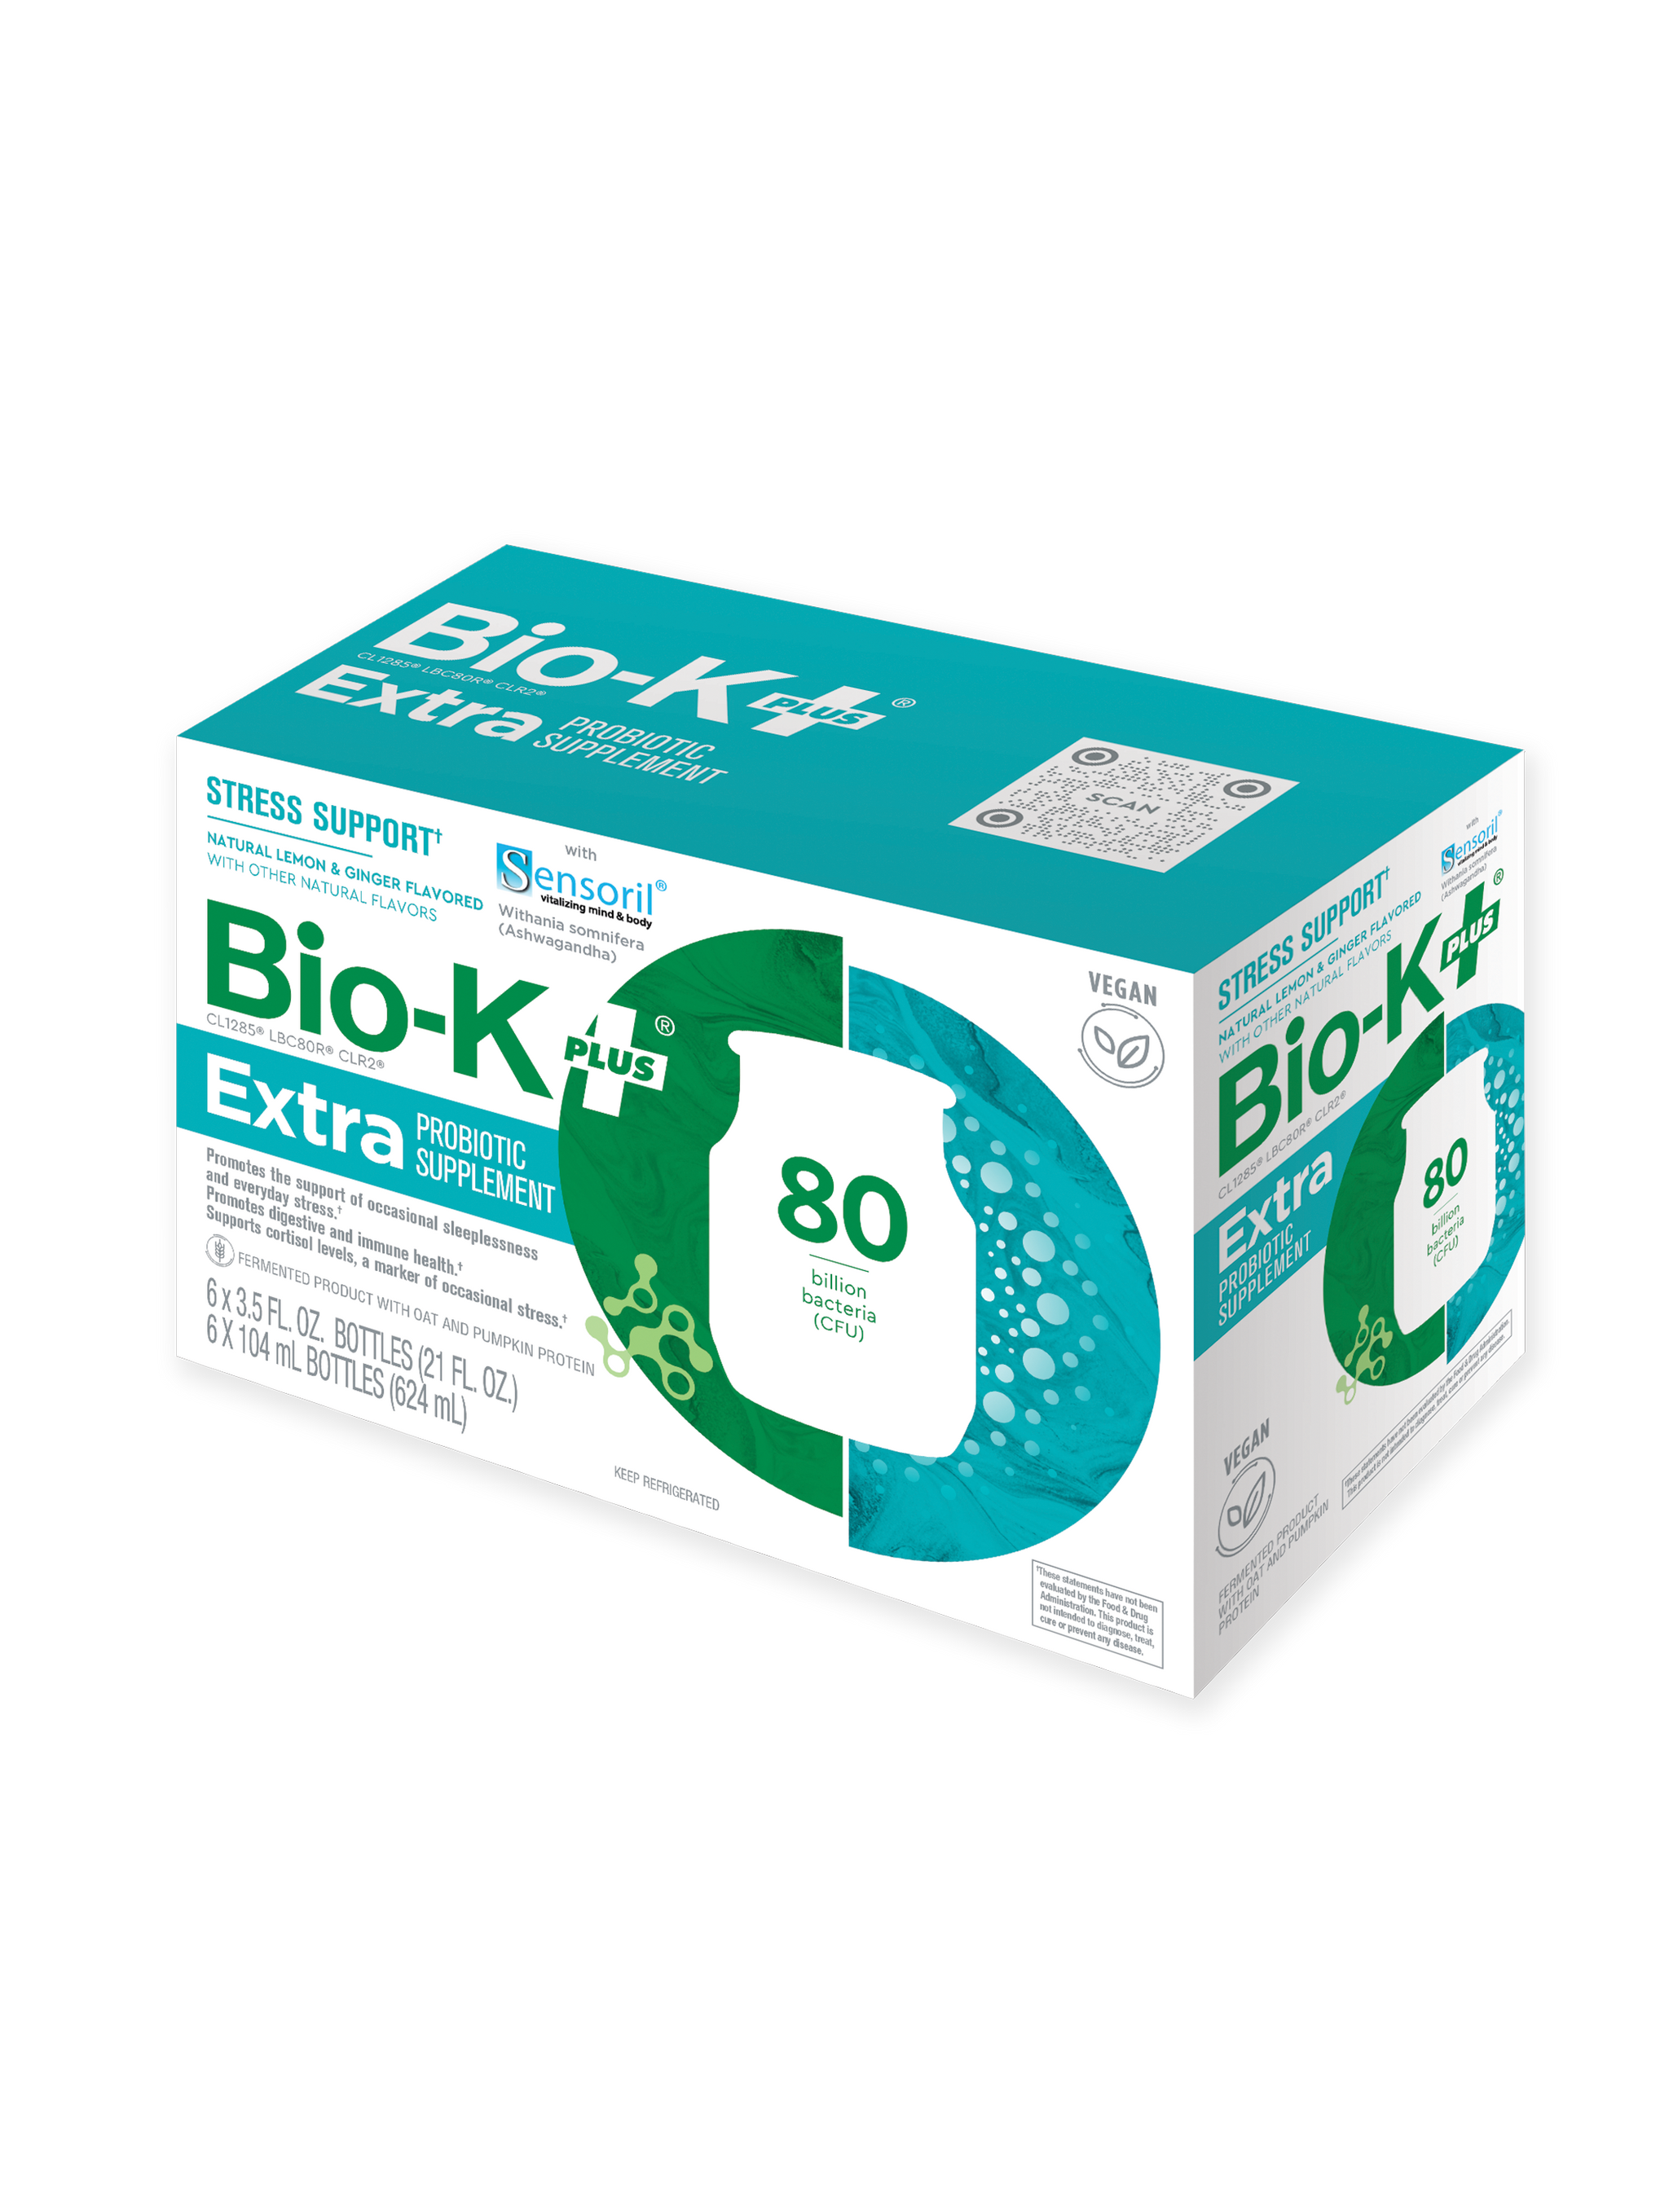 6-packs of Bio-K+ Stress Support